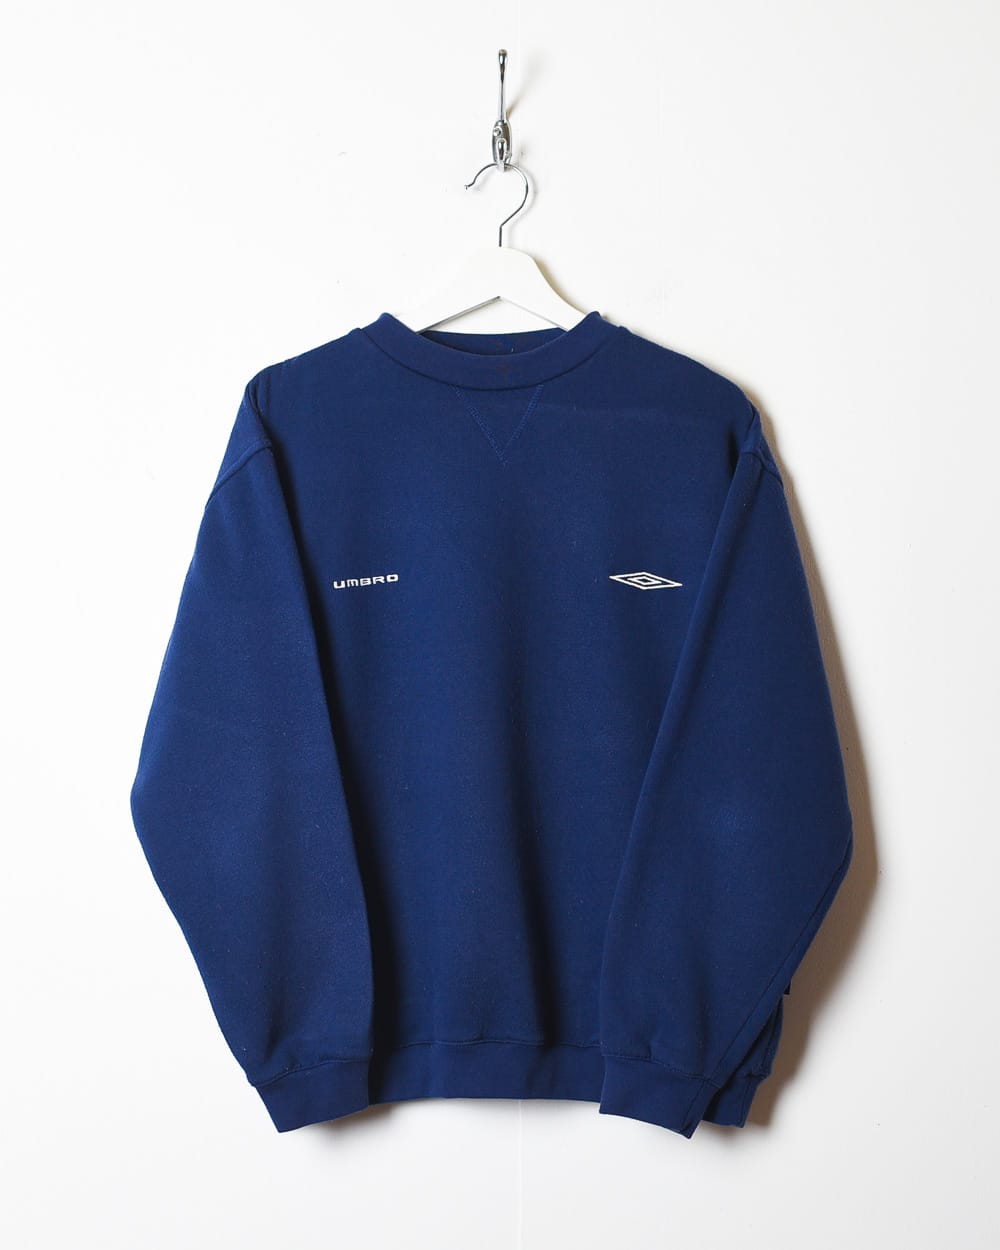 Navy Umbro Sweatshirt - Medium